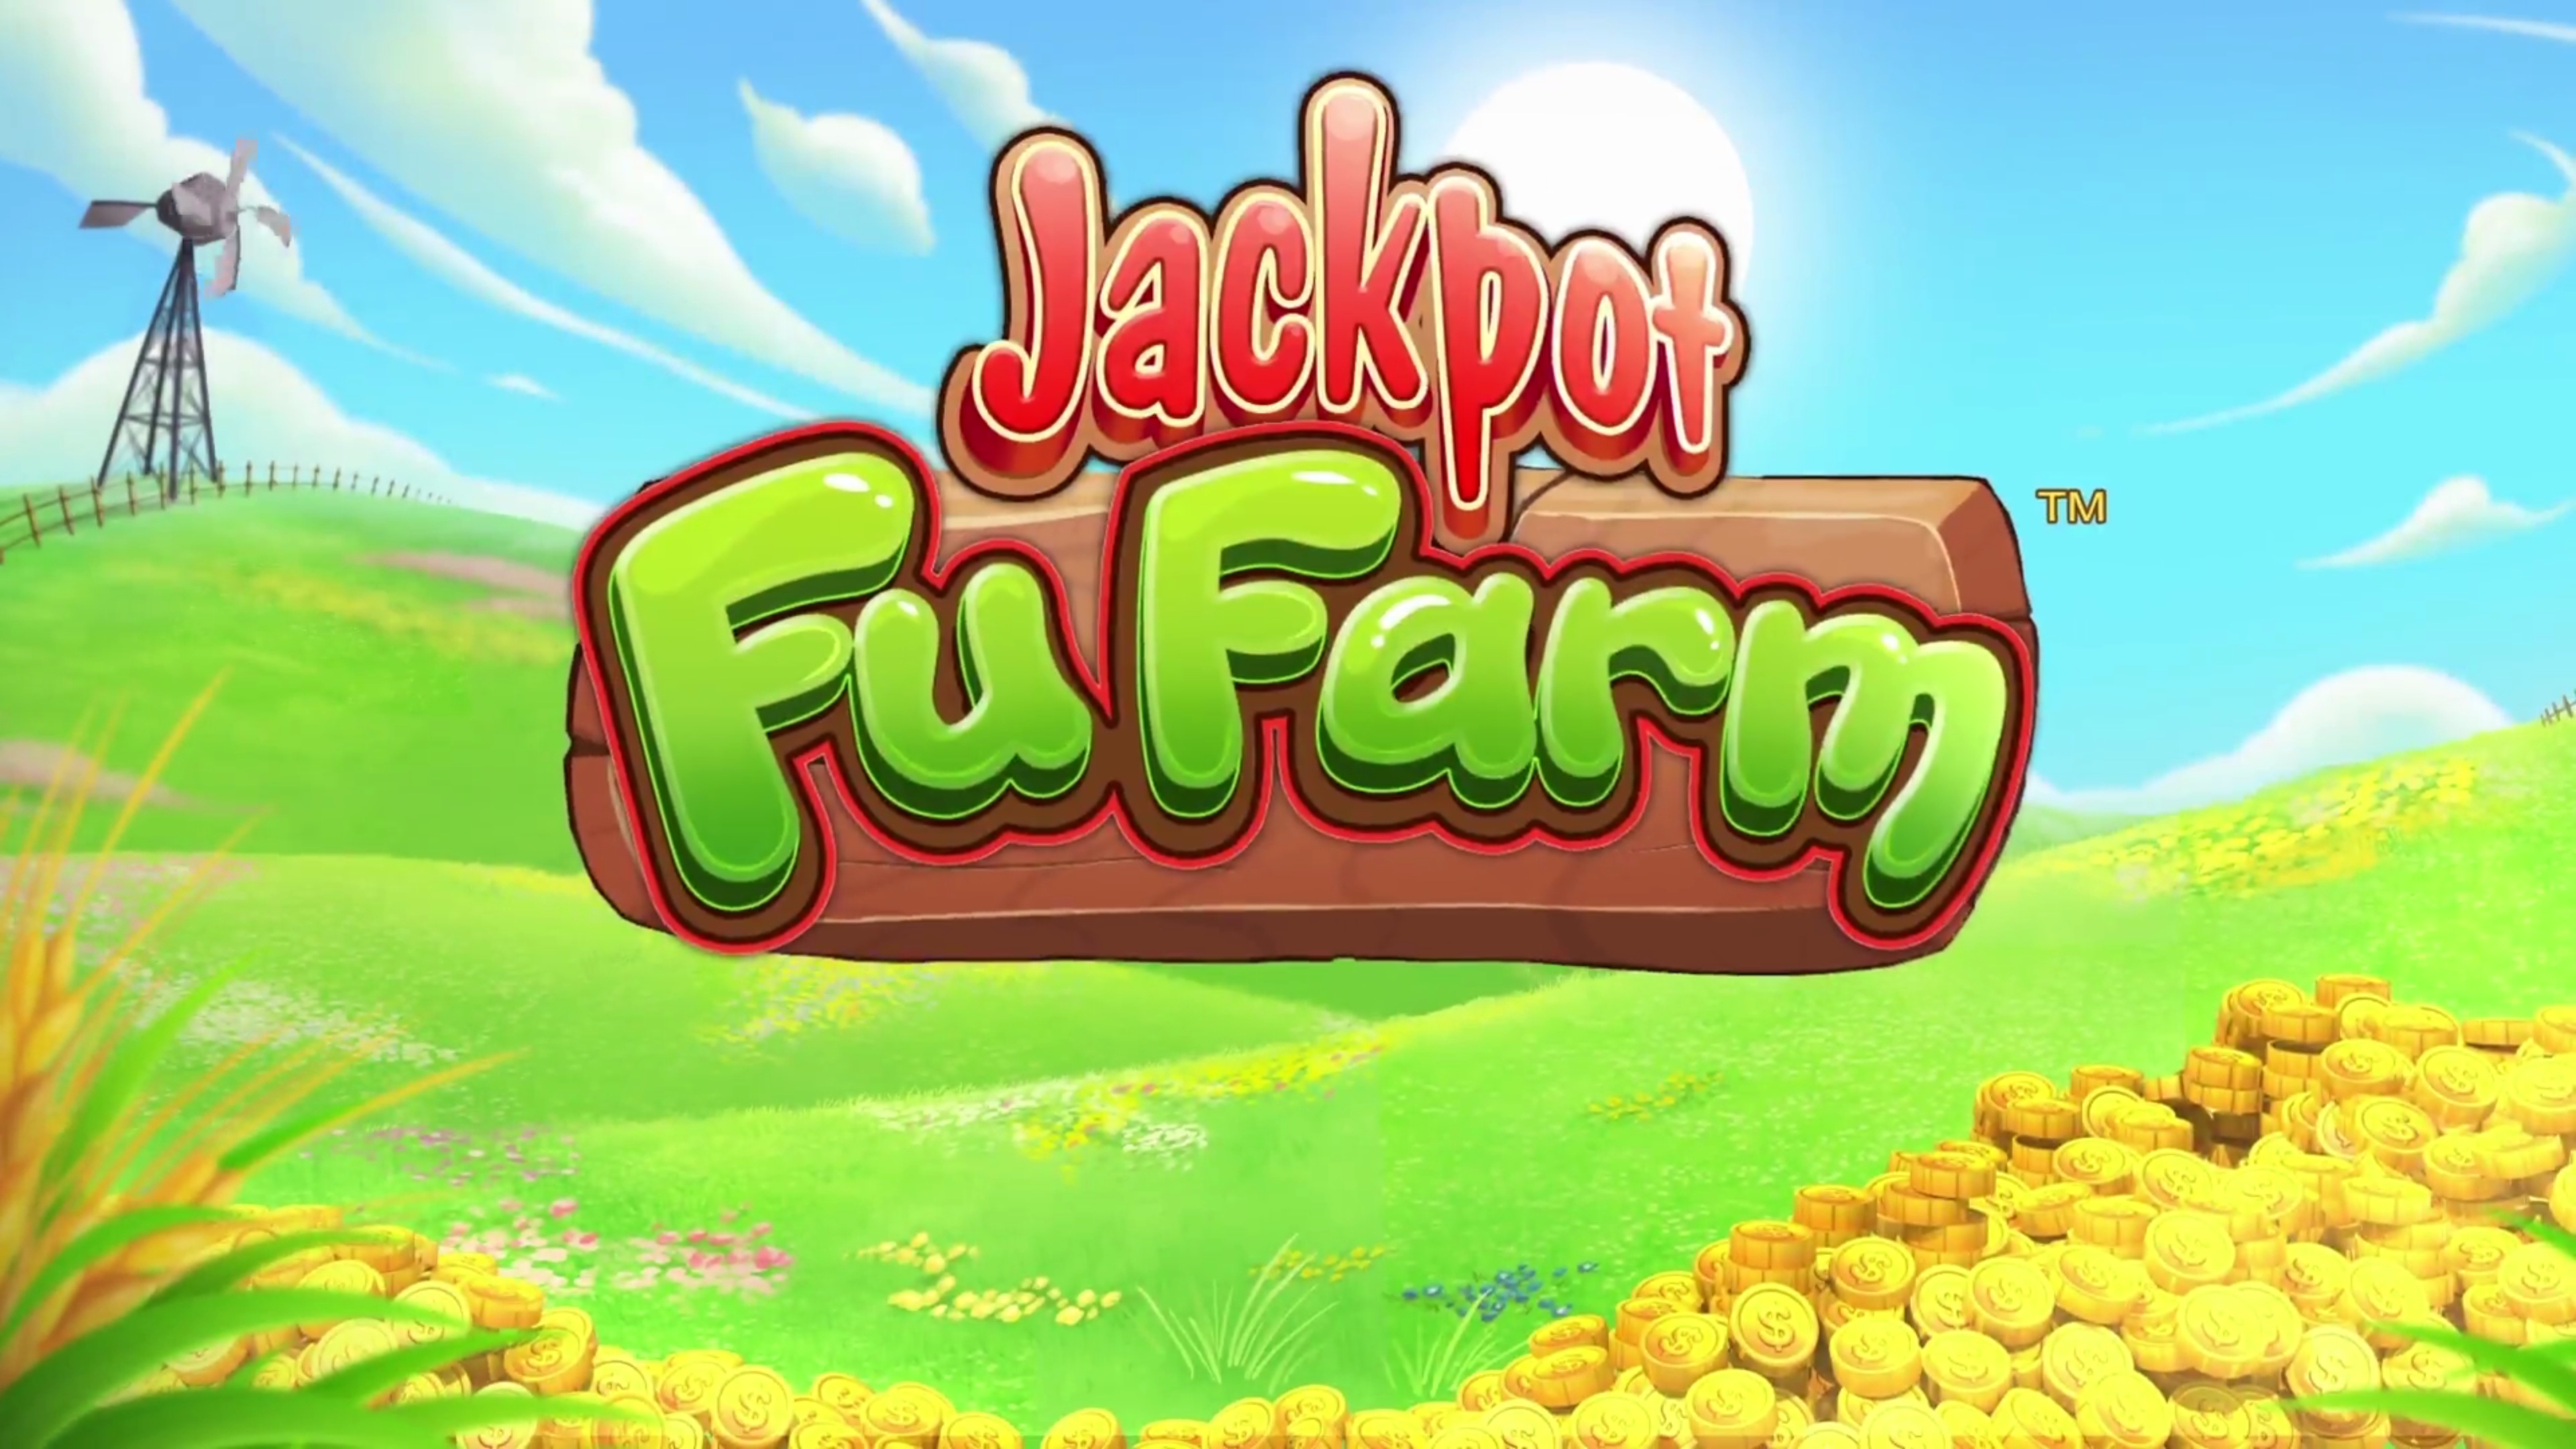 Fu Farm Jackpot